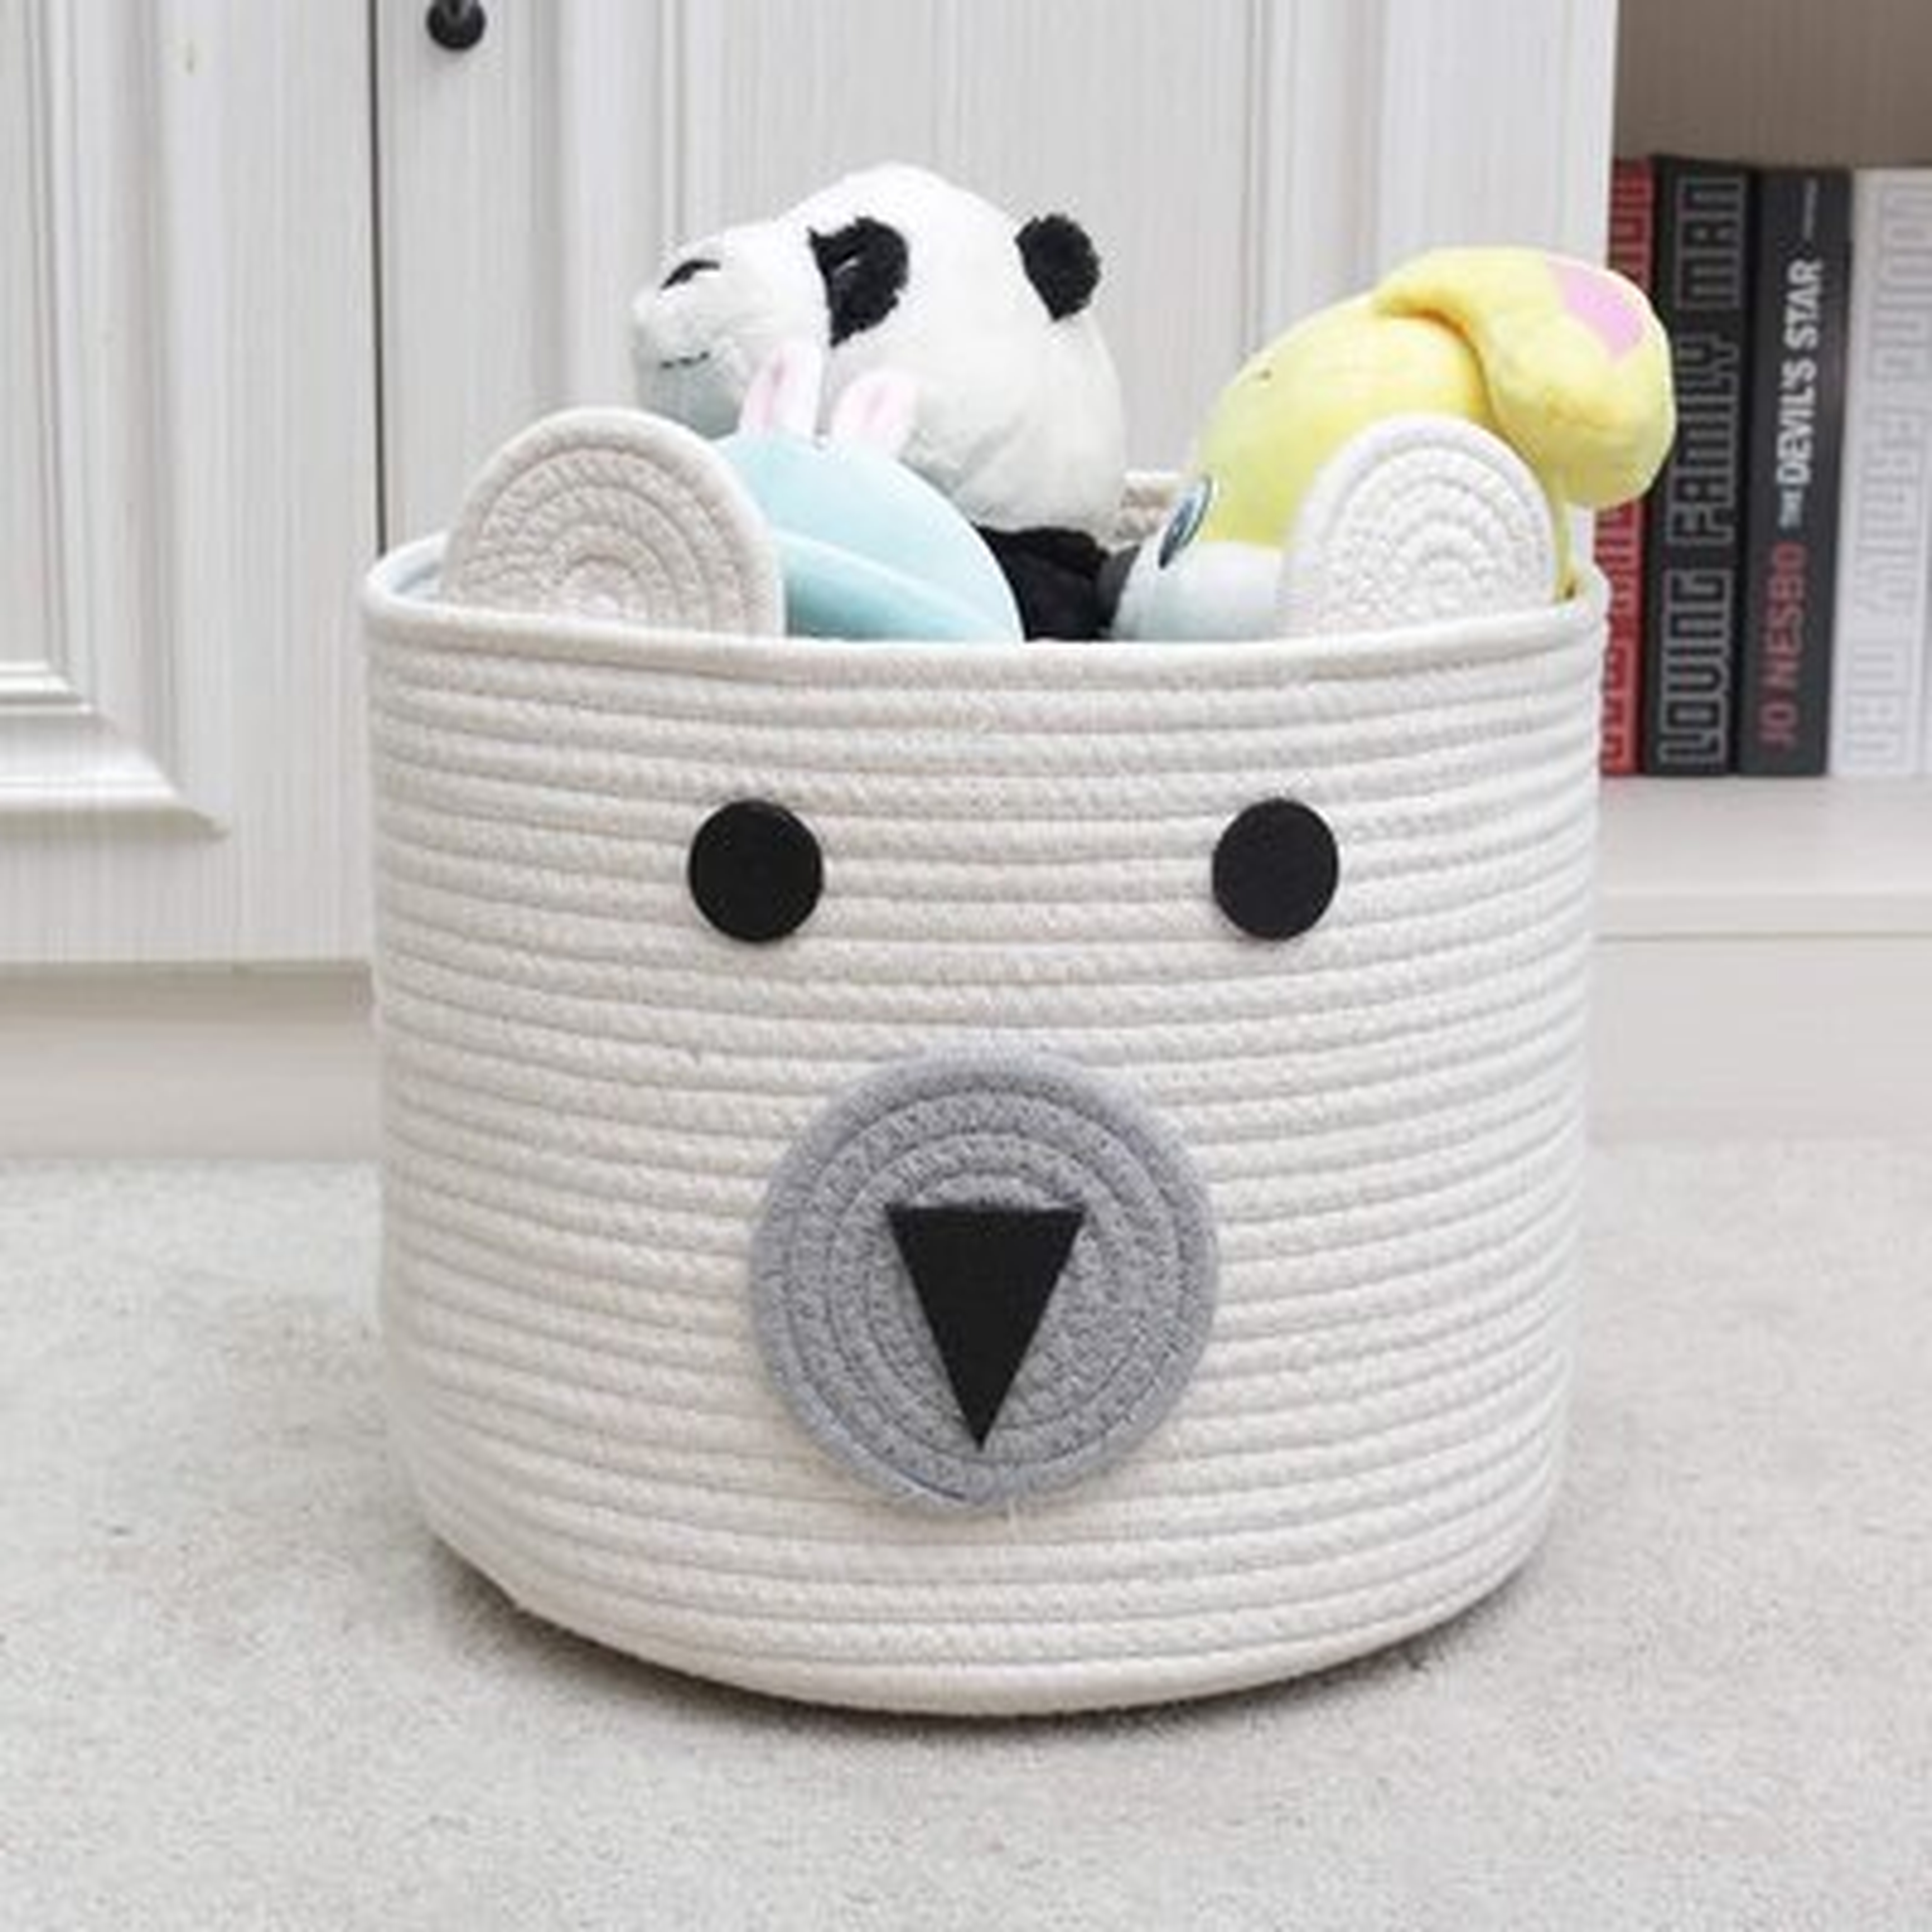 Bear Basket, Toy Storage Bin, Cotton Rope Basket, Woven Laundry Hamper, Cute Storage Basket For Toys, Cloths In Bedroom, Nursery & Living Room - Wayfair